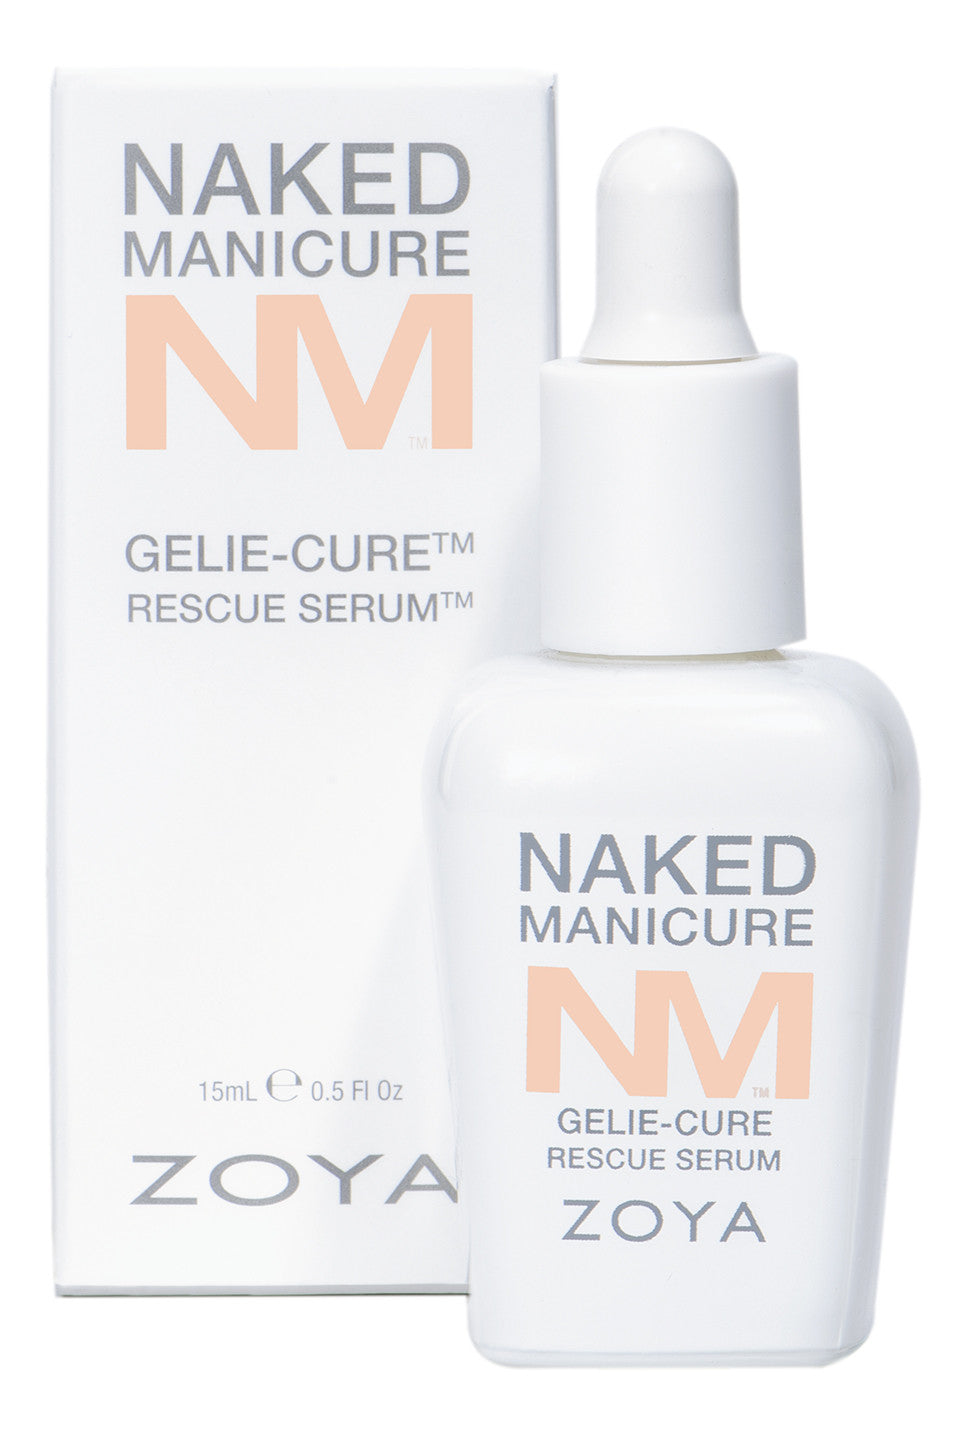 Zoya Naked Manicure Gelie Cure Rescue Serum